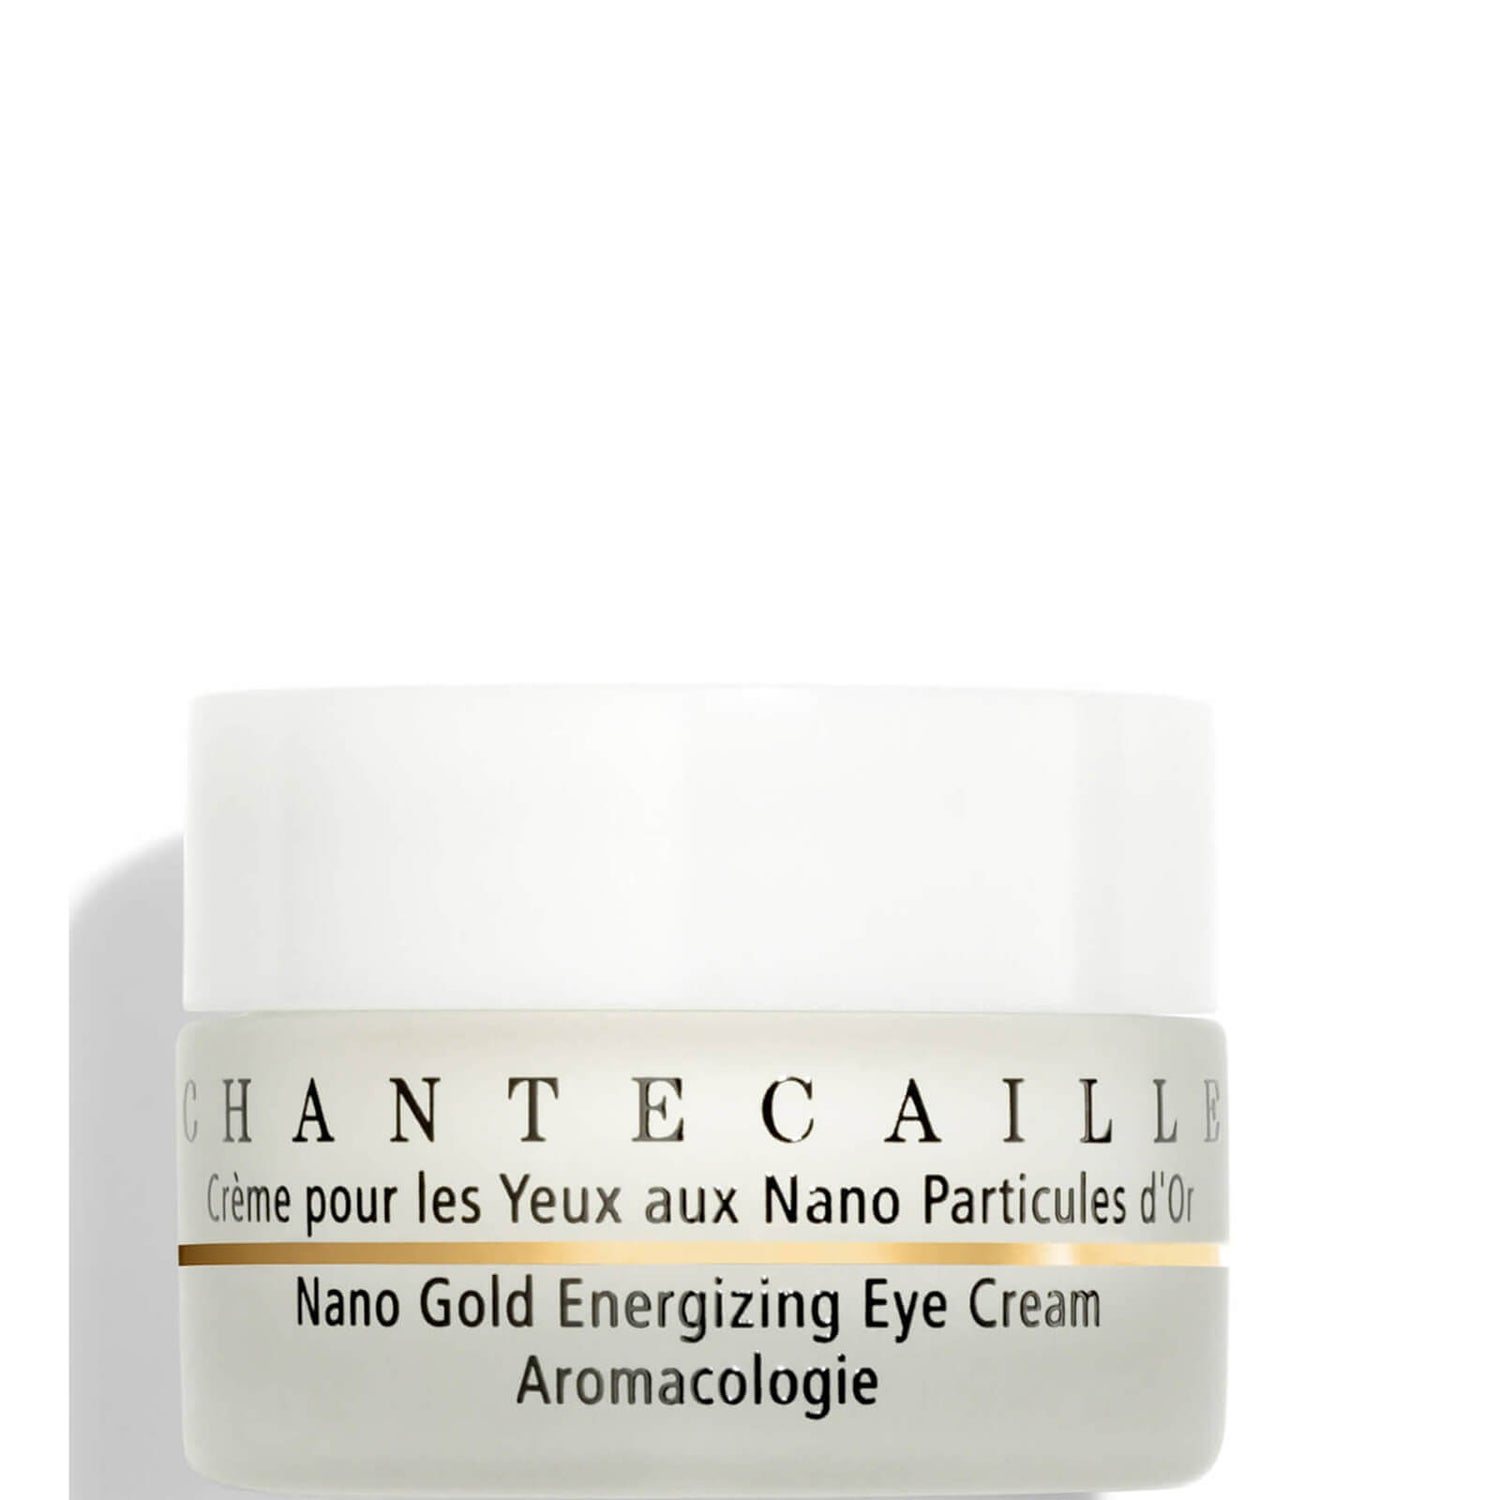 Chantecaille Gold Energizing Eye Cream